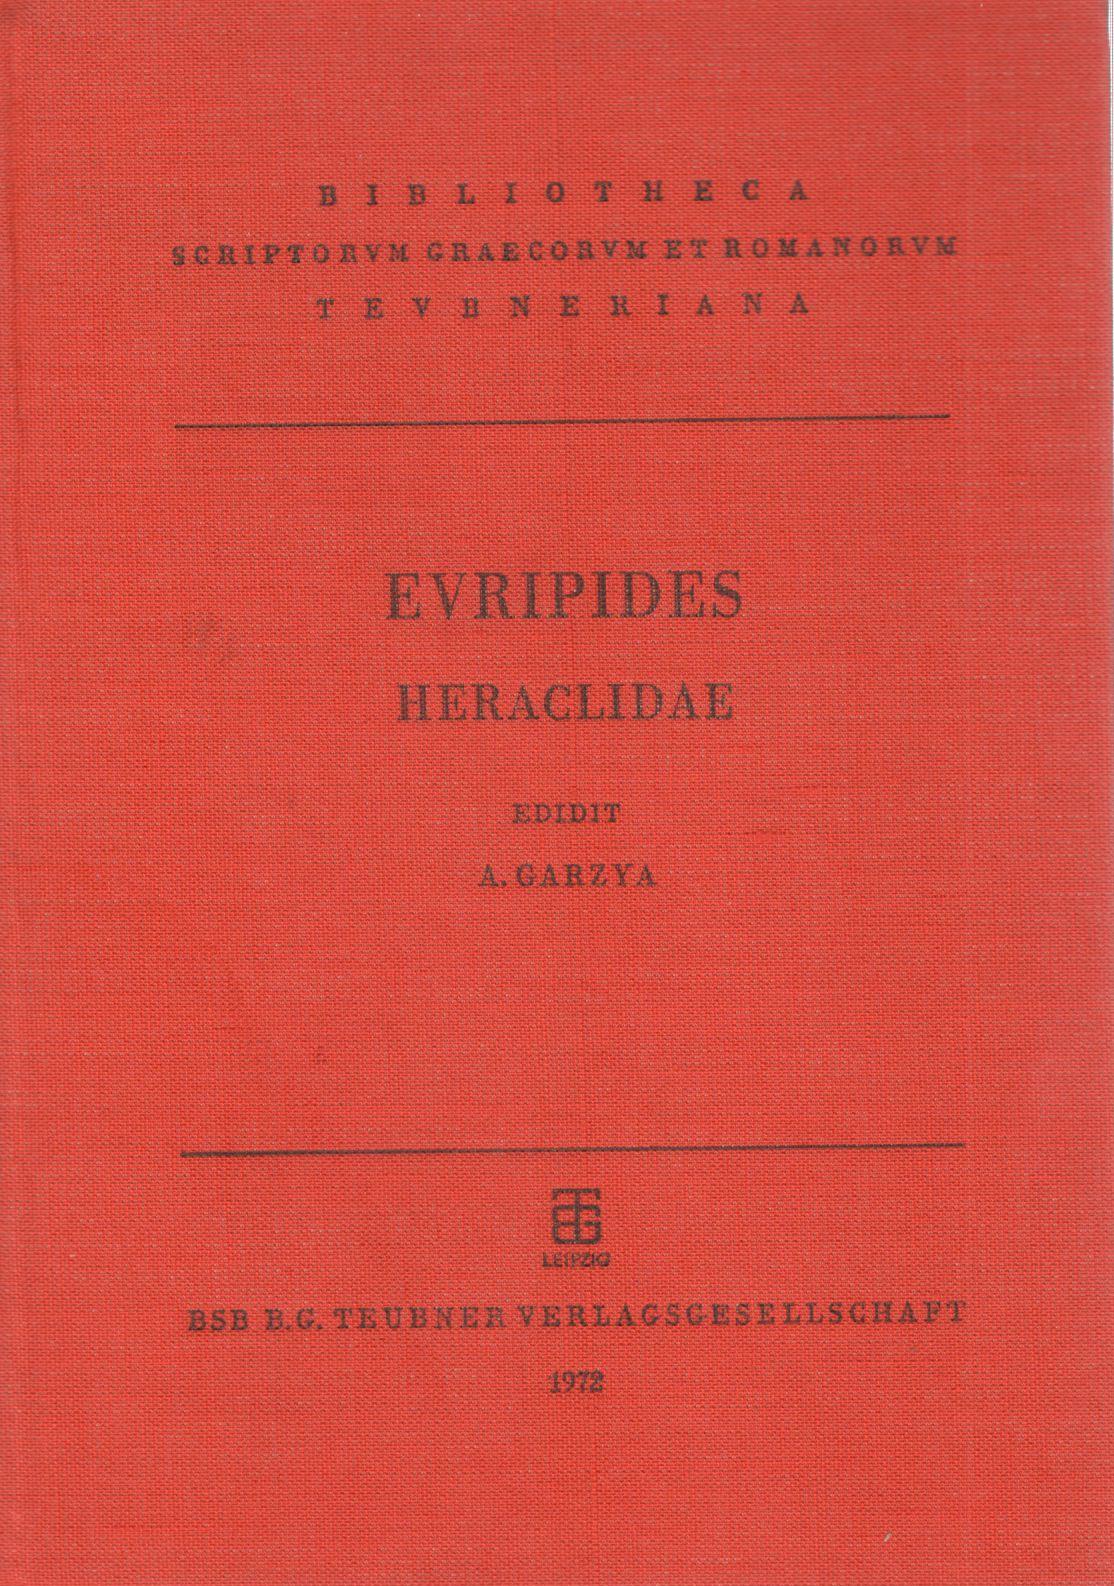 EURIPIDIS HERACLIDAE